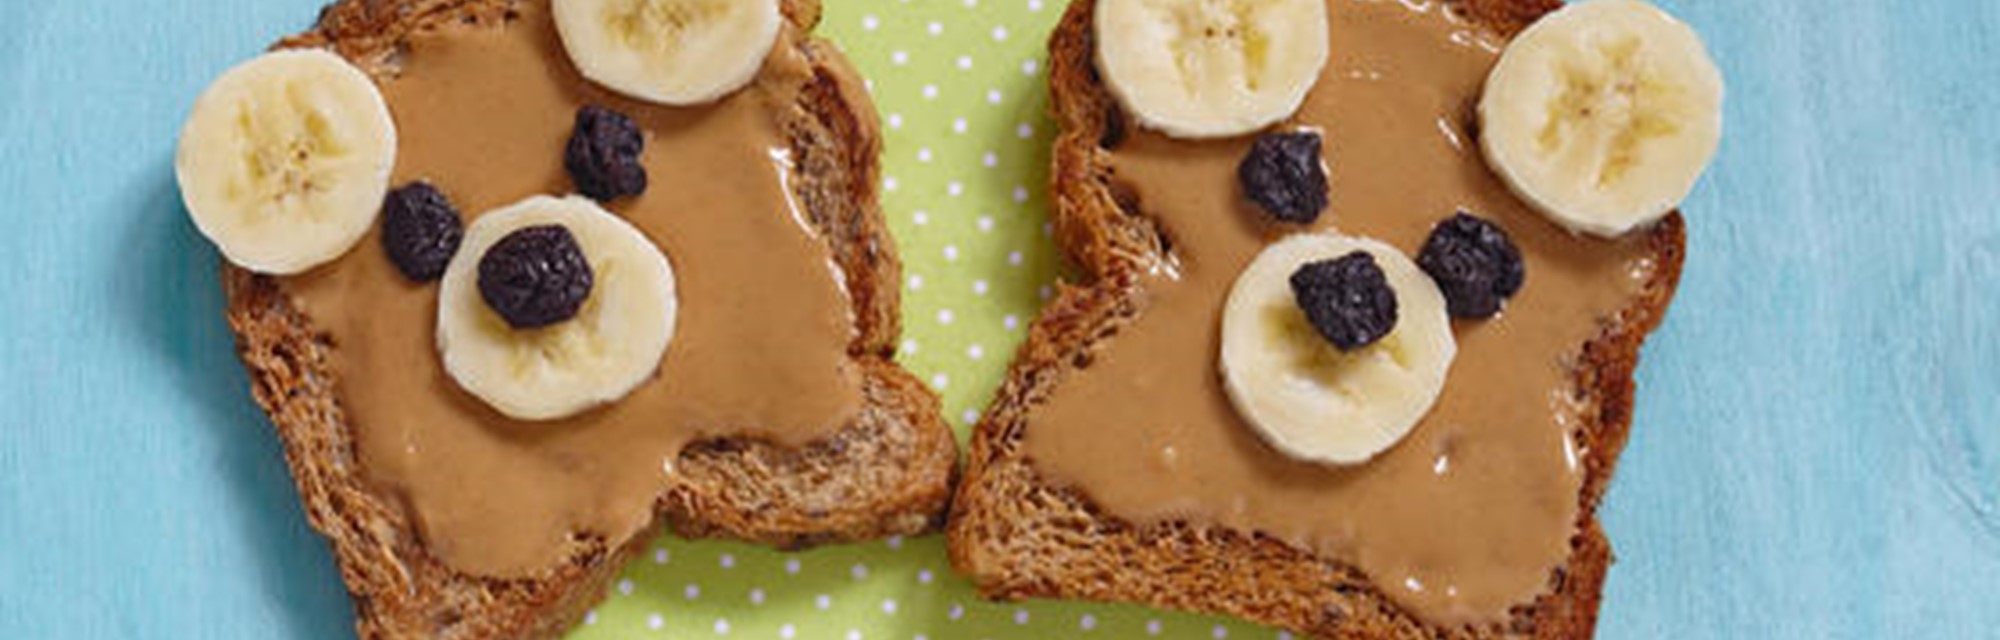 Peanut butter & blueberry banana bears toast